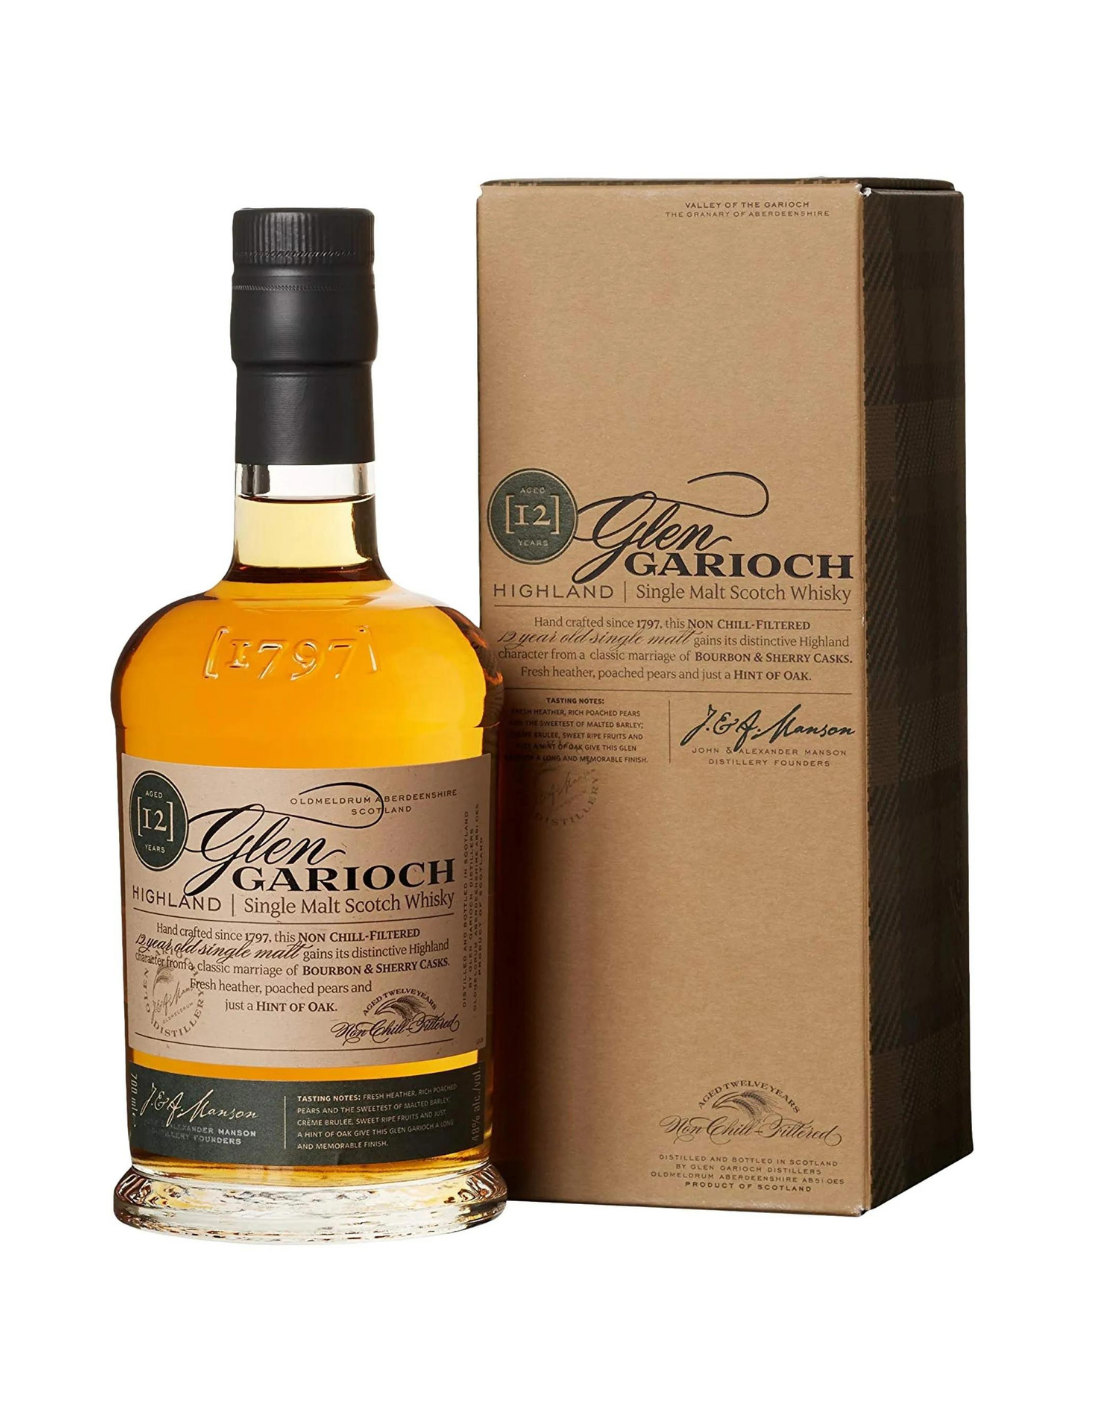 Whisky Glen Garioch Single Malt Scotch, 0.7L, 12 ani, 48% alc., Scotia alcooldiscount.ro